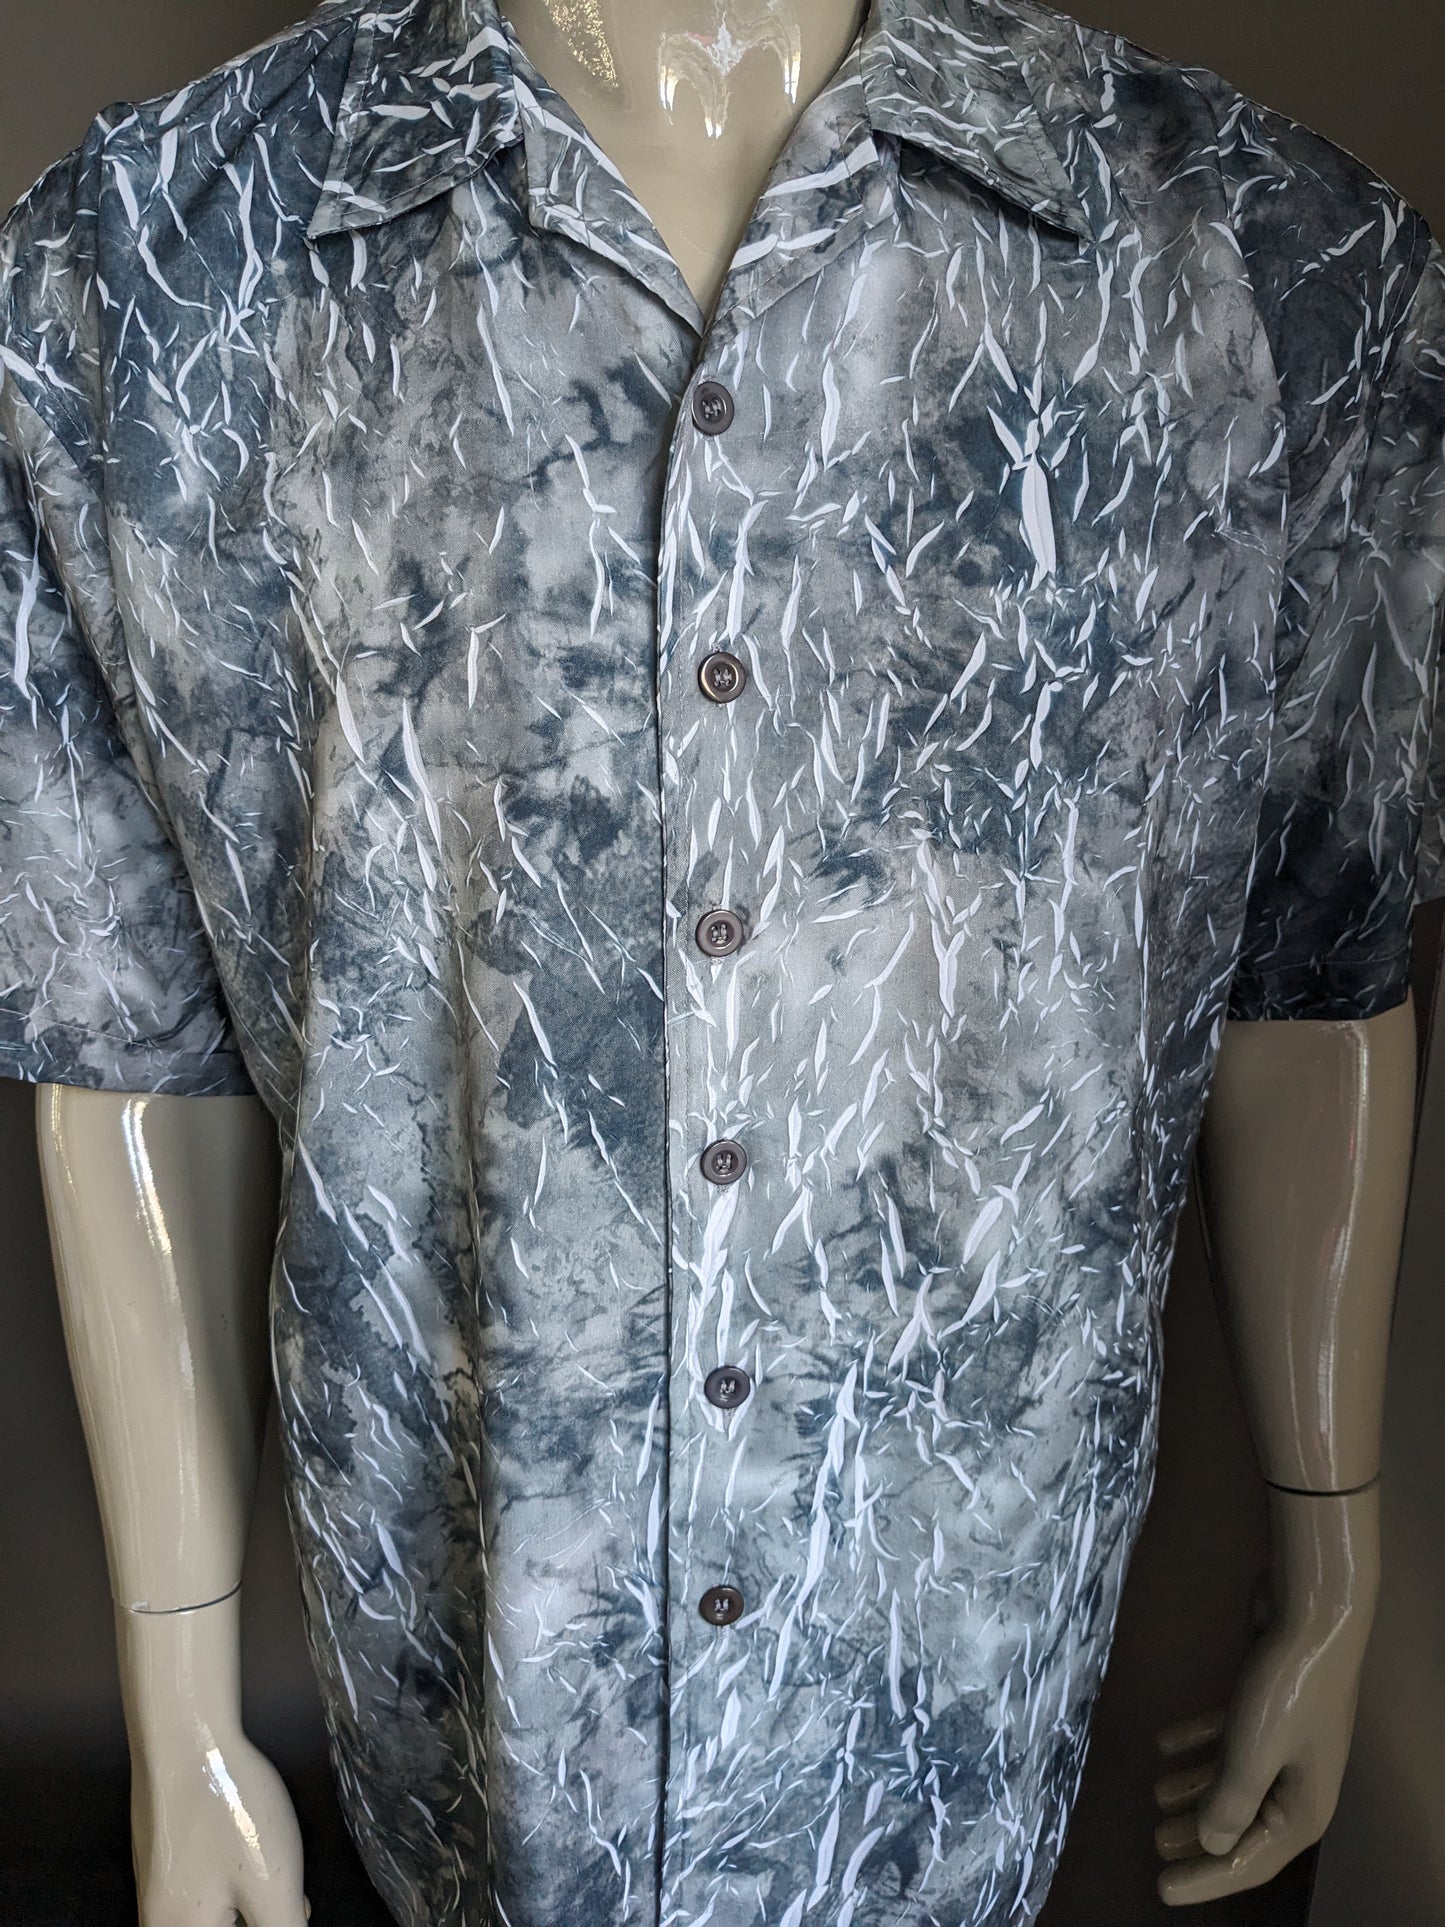 Ne-I-I Vintage Shirt Short Sleeve. Effet de rides blanches grises. Taille xl / xxl-2xl.